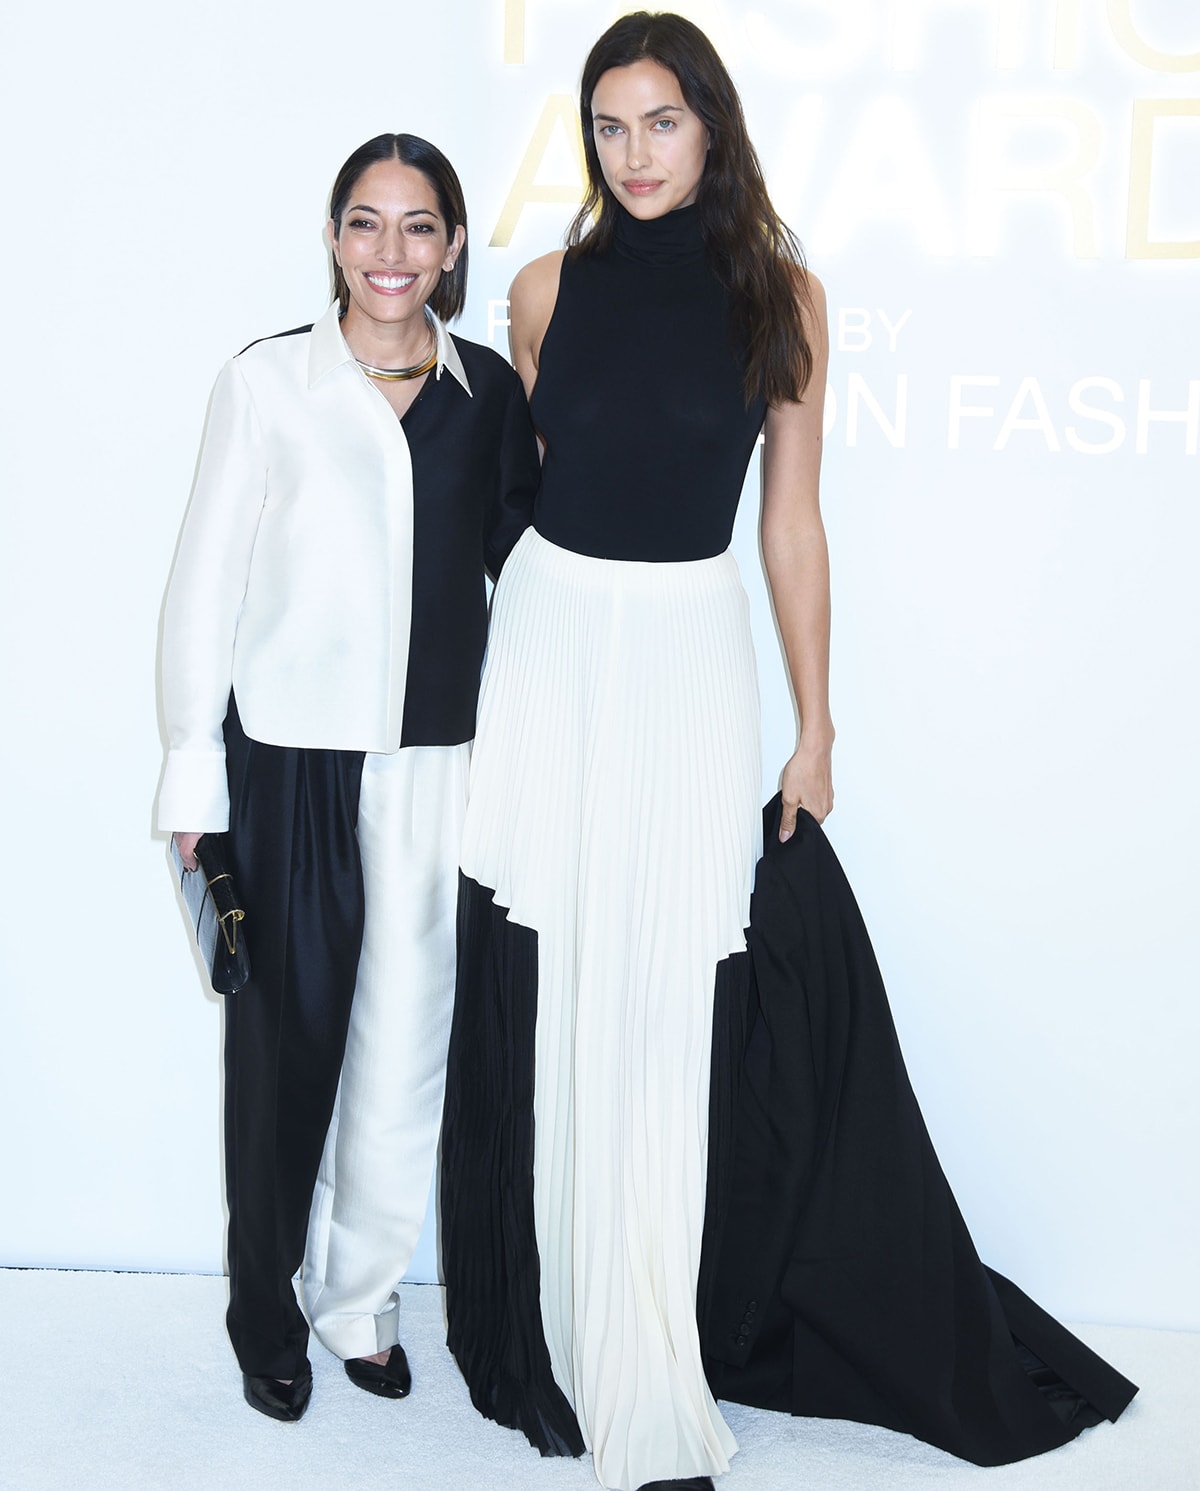 Bare-faced Irina Shayk poses with fashion designer Nellie Partow